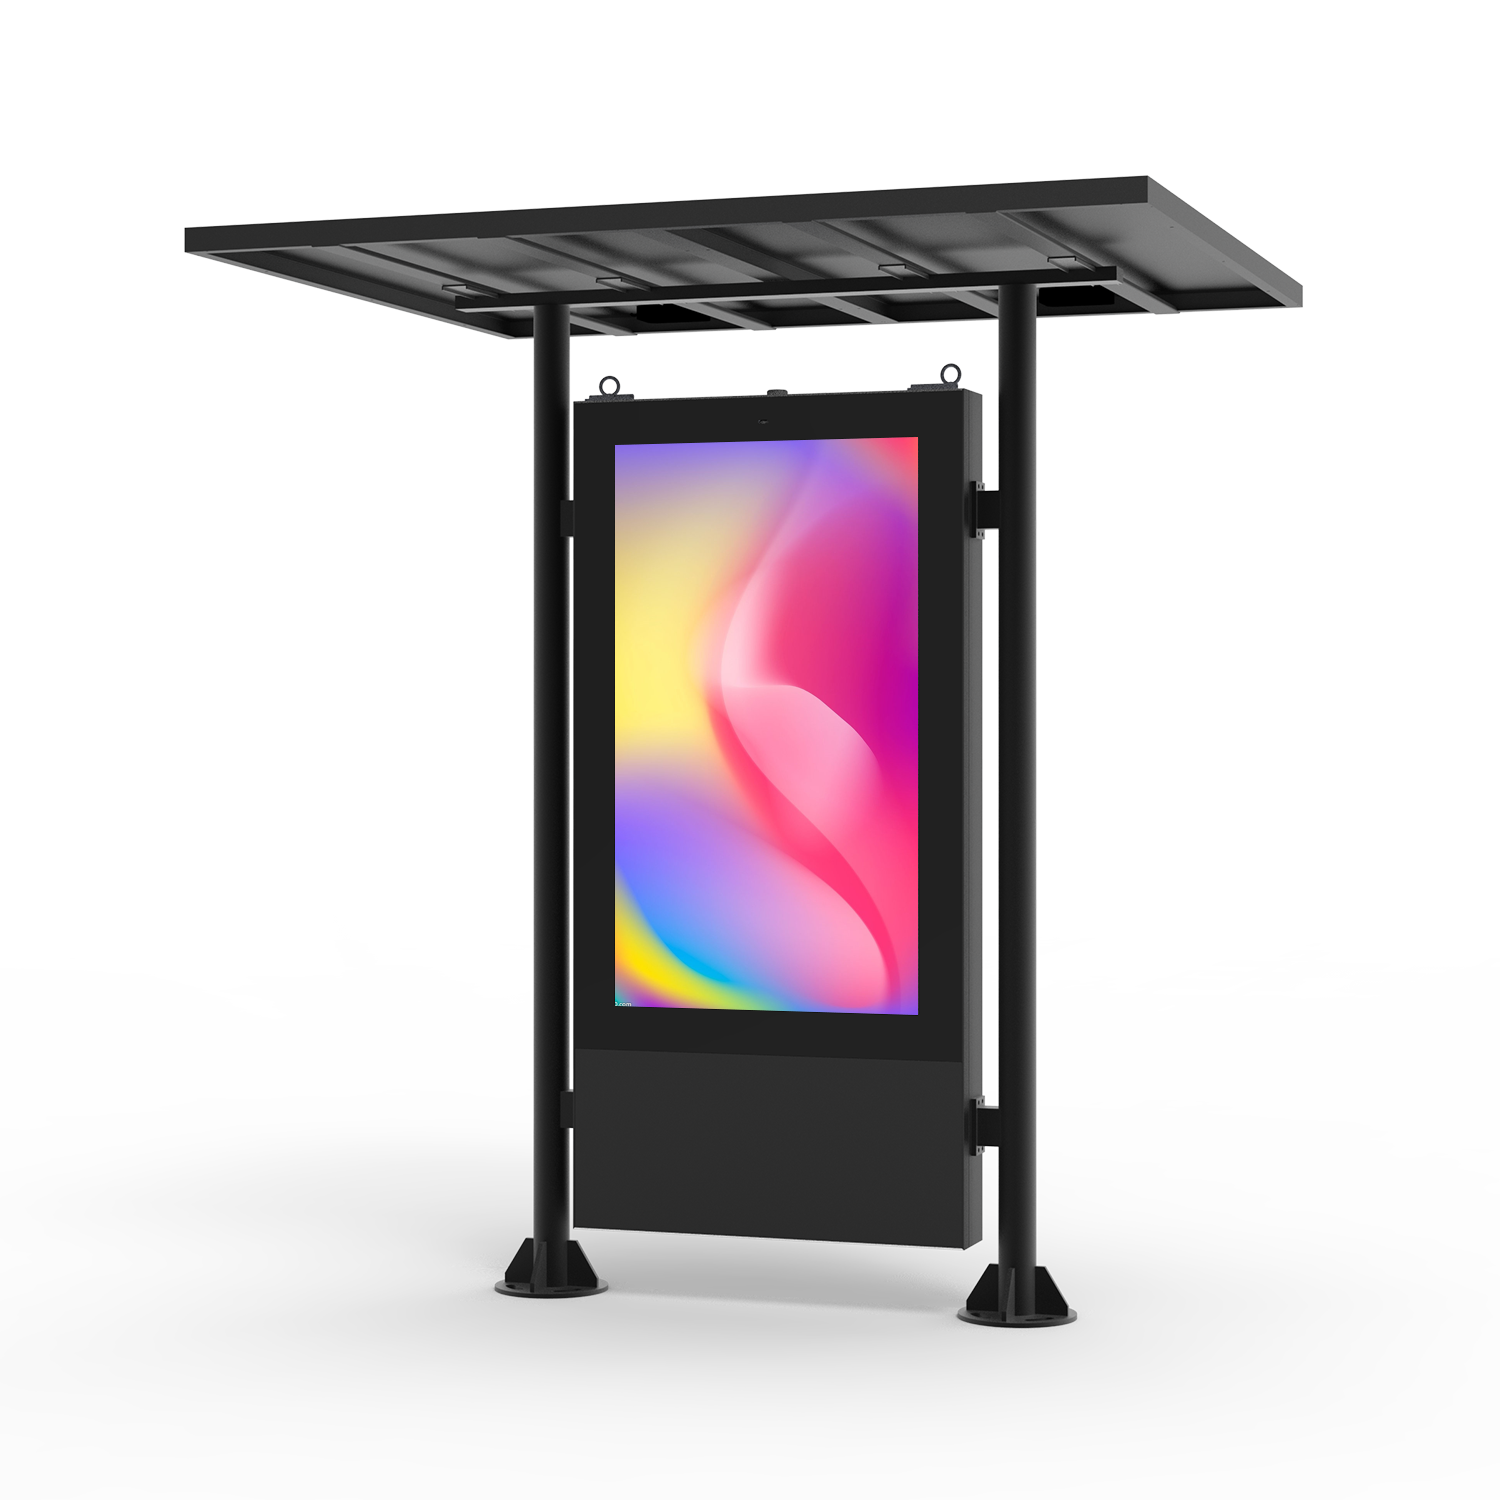 Solar-powered smart LCD digital signage